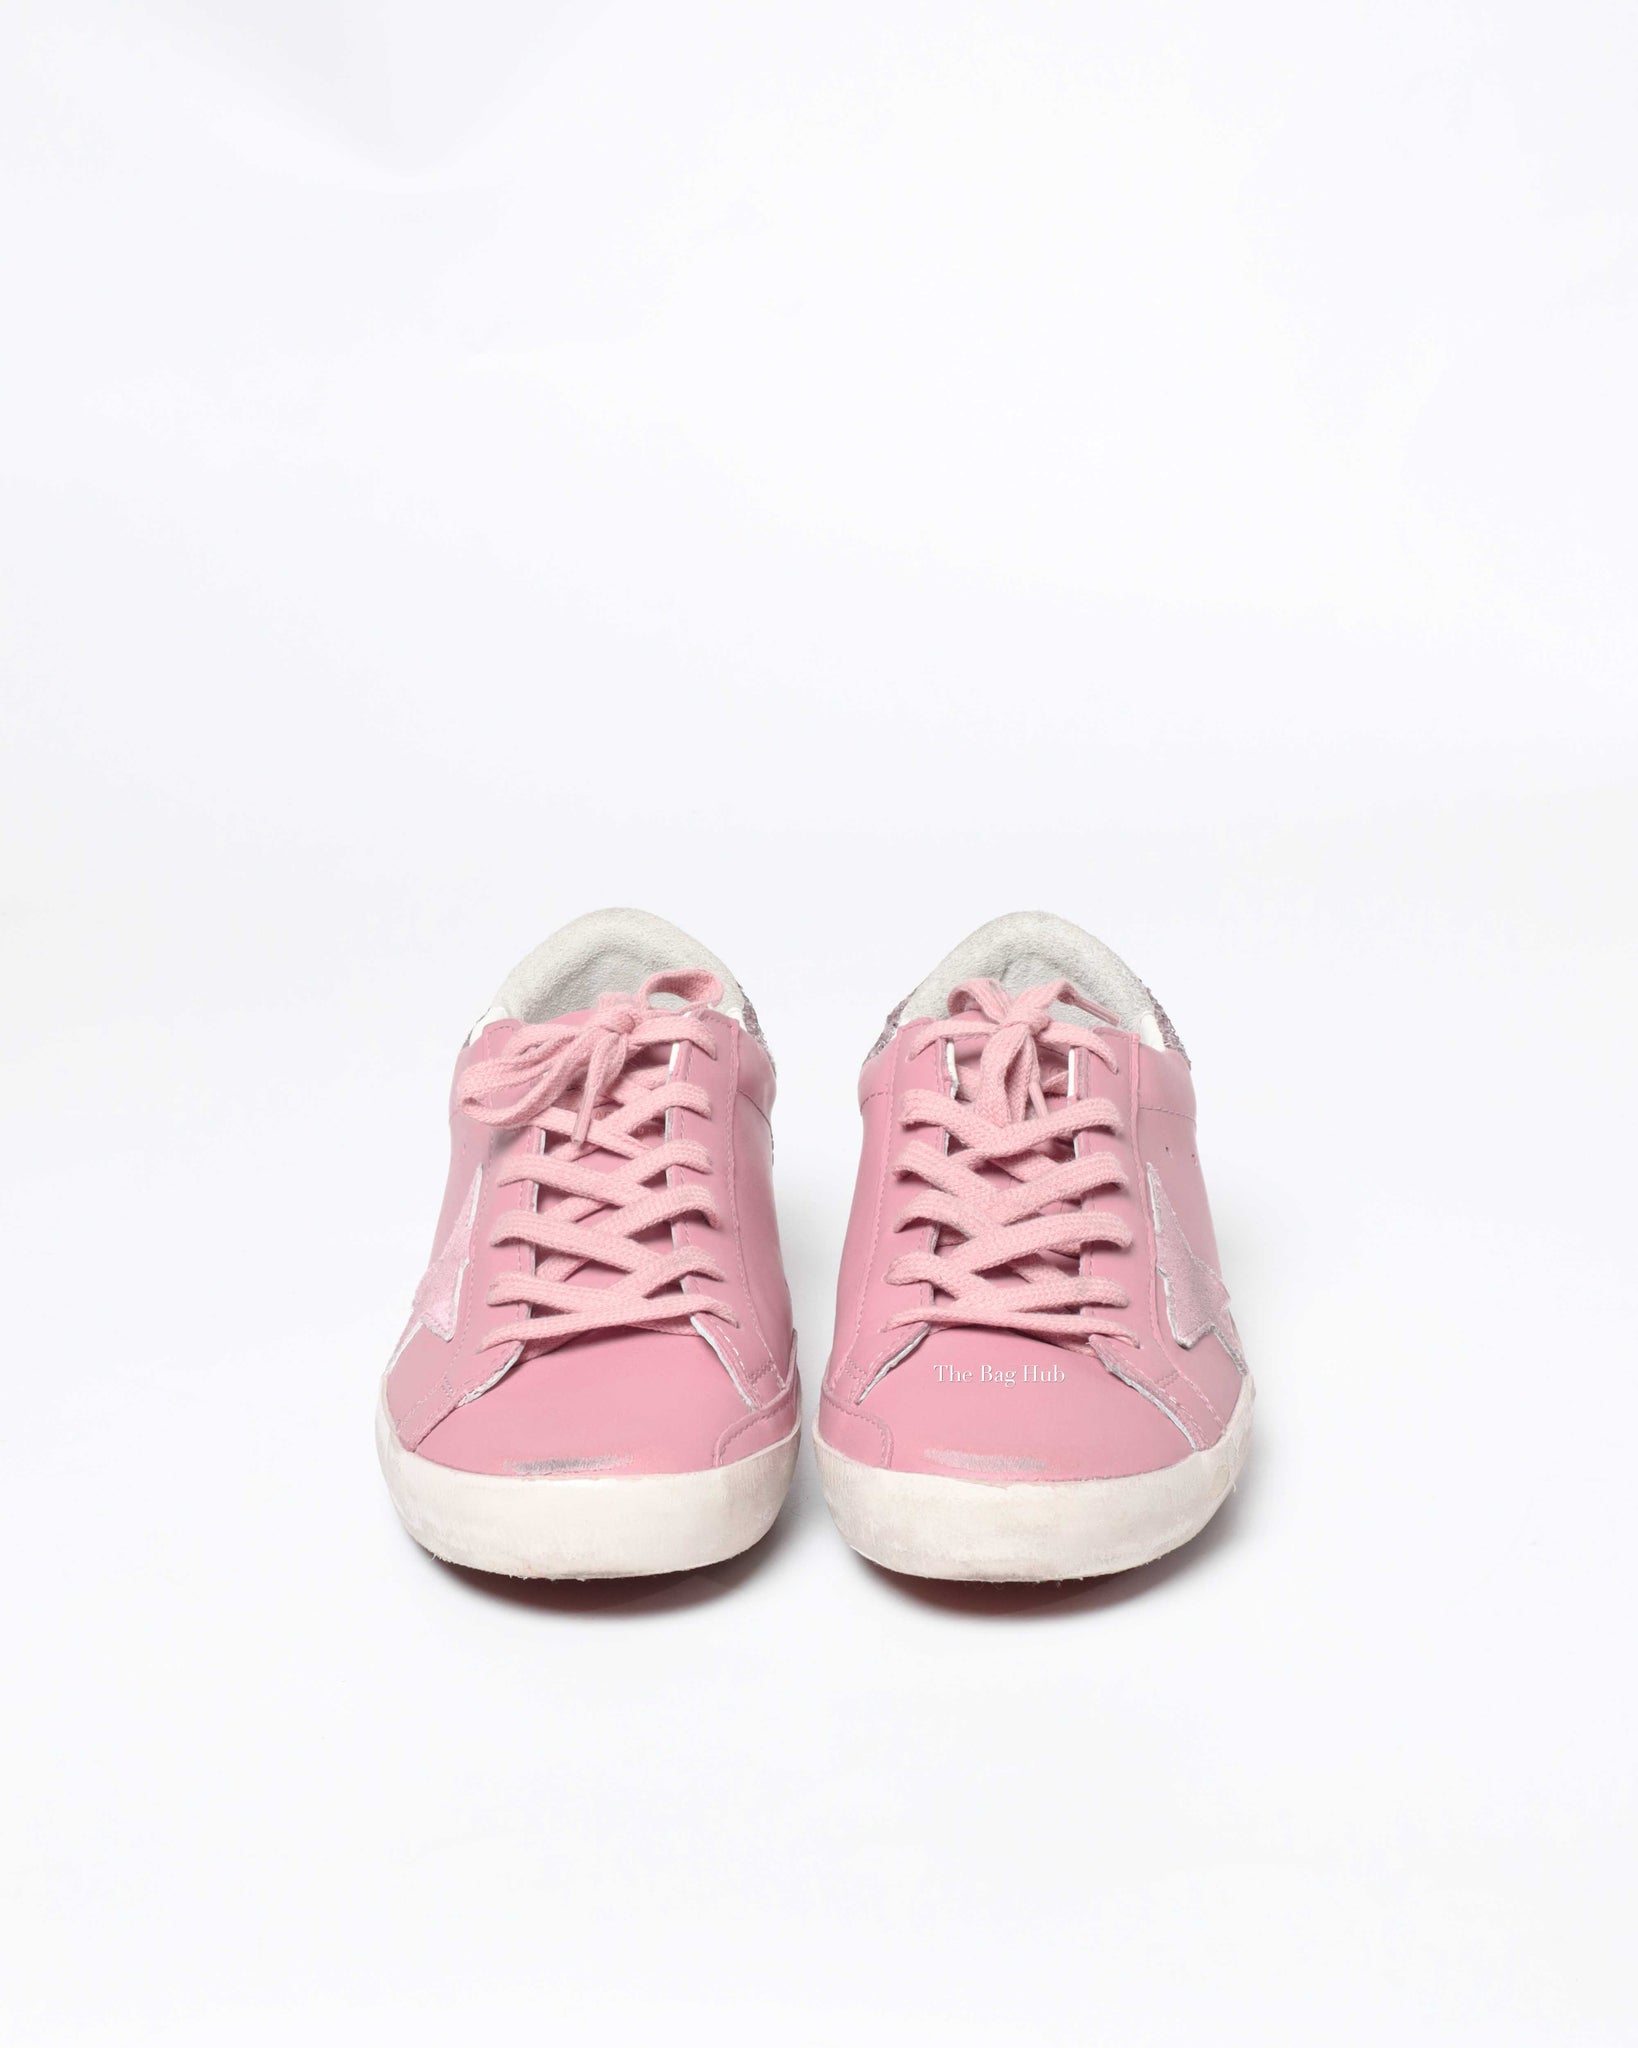 Golden Goose Antique Pink Leather w/ Glitter Heeltab Classic Superstar Sneaker Size 39-3